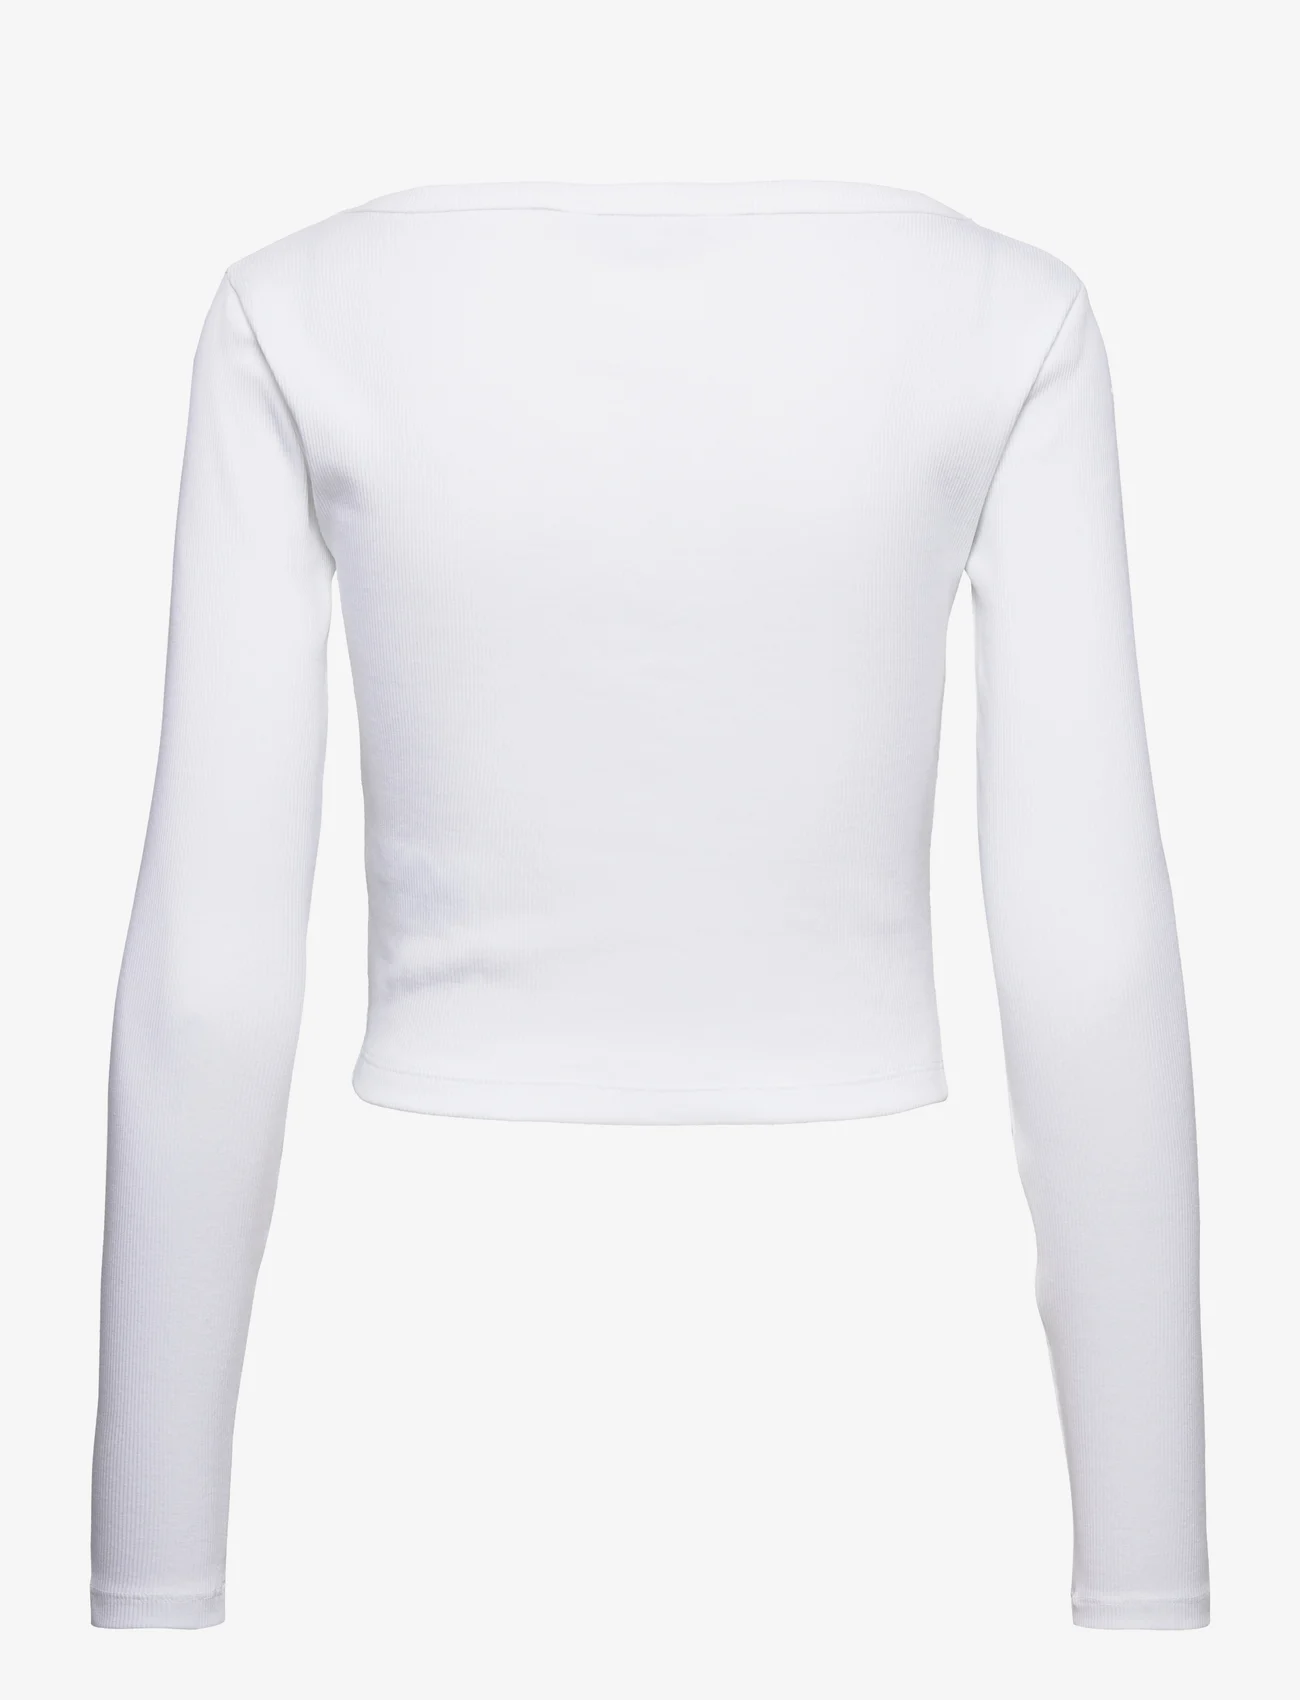 Calvin Klein Jeans - WOVEN LABEL RIB LS CARDIGAN - langærmede toppe - bright white - 1